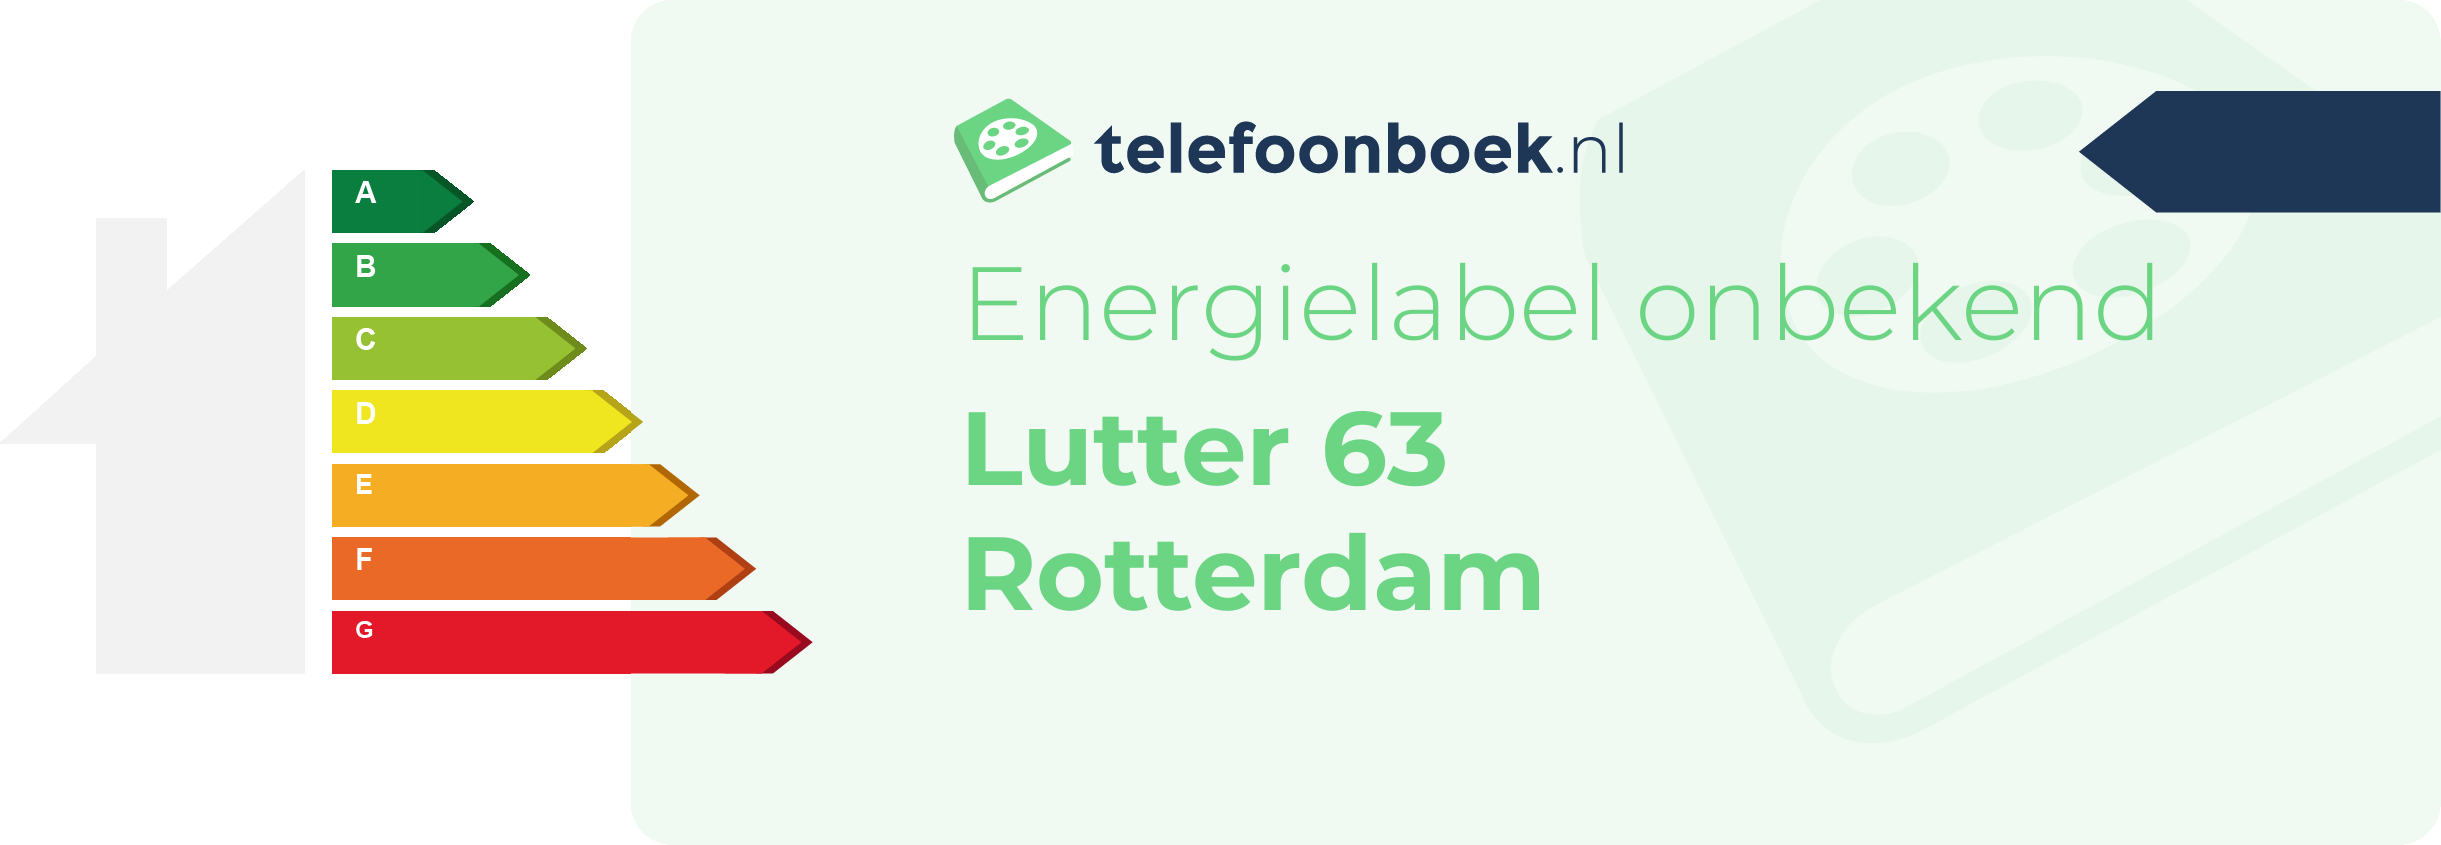 Energielabel Lutter 63 Rotterdam